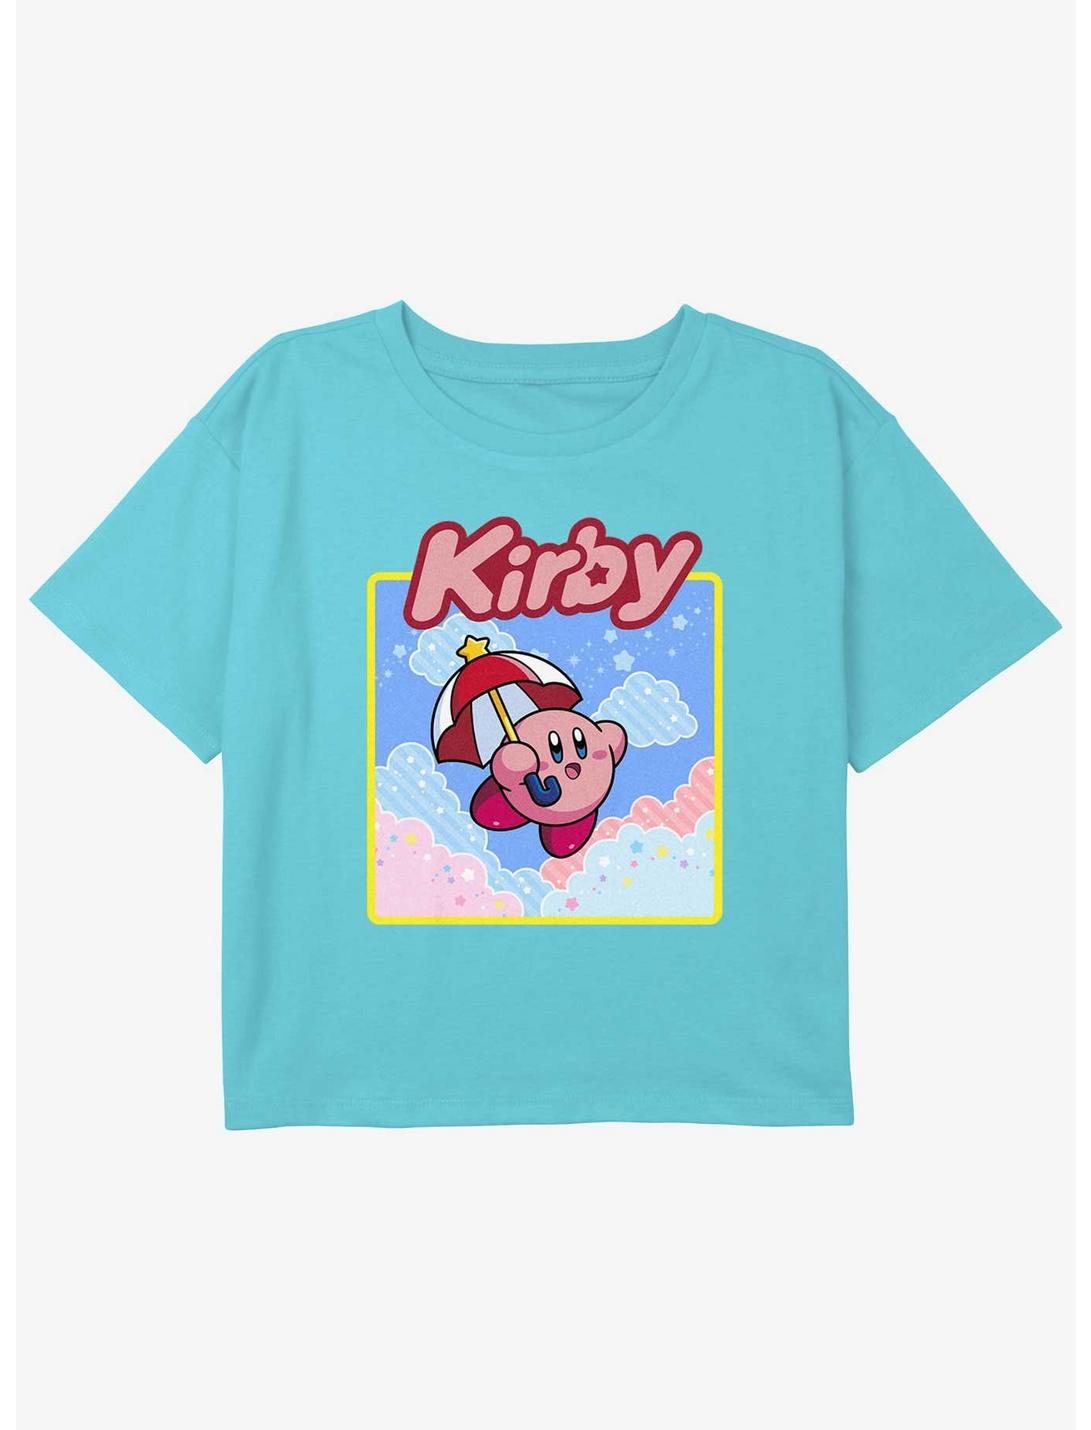 Kirby Starry Umbrella Girls Youth Crop T-Shirt, BLUE, hi-res